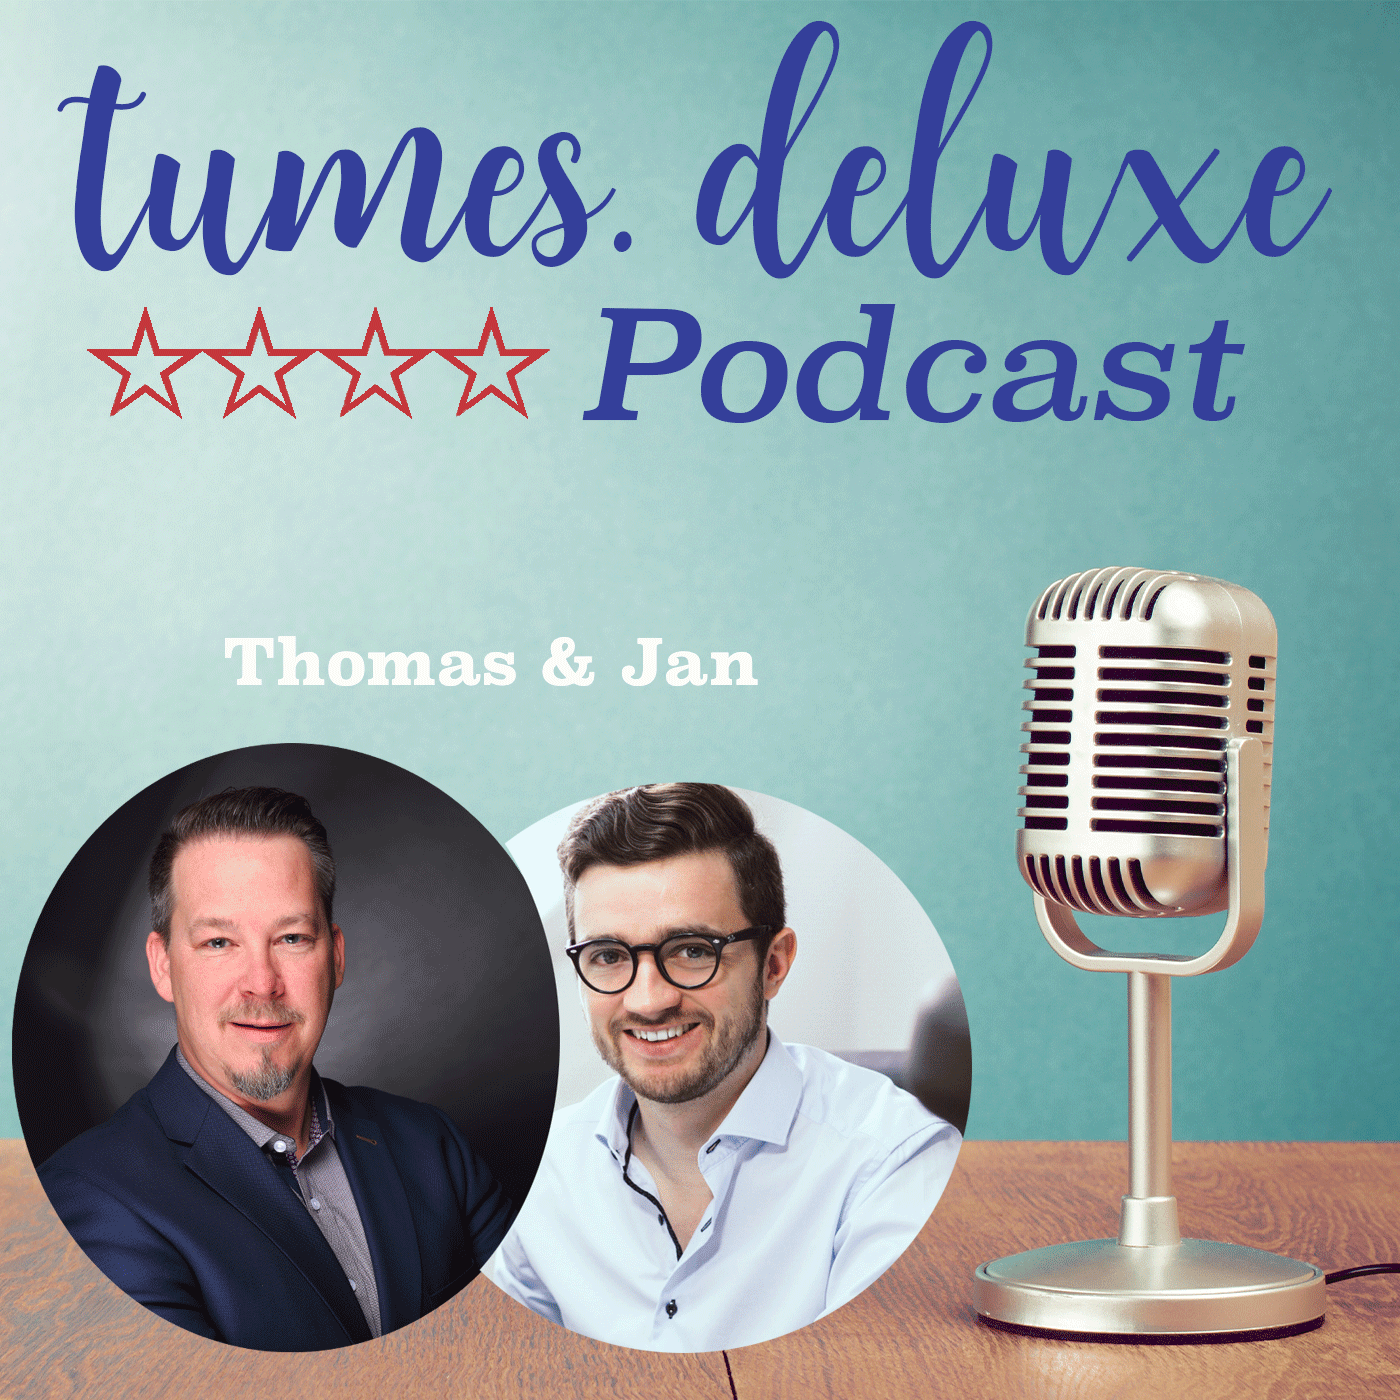 tumes.de luxe**** Podcast #57